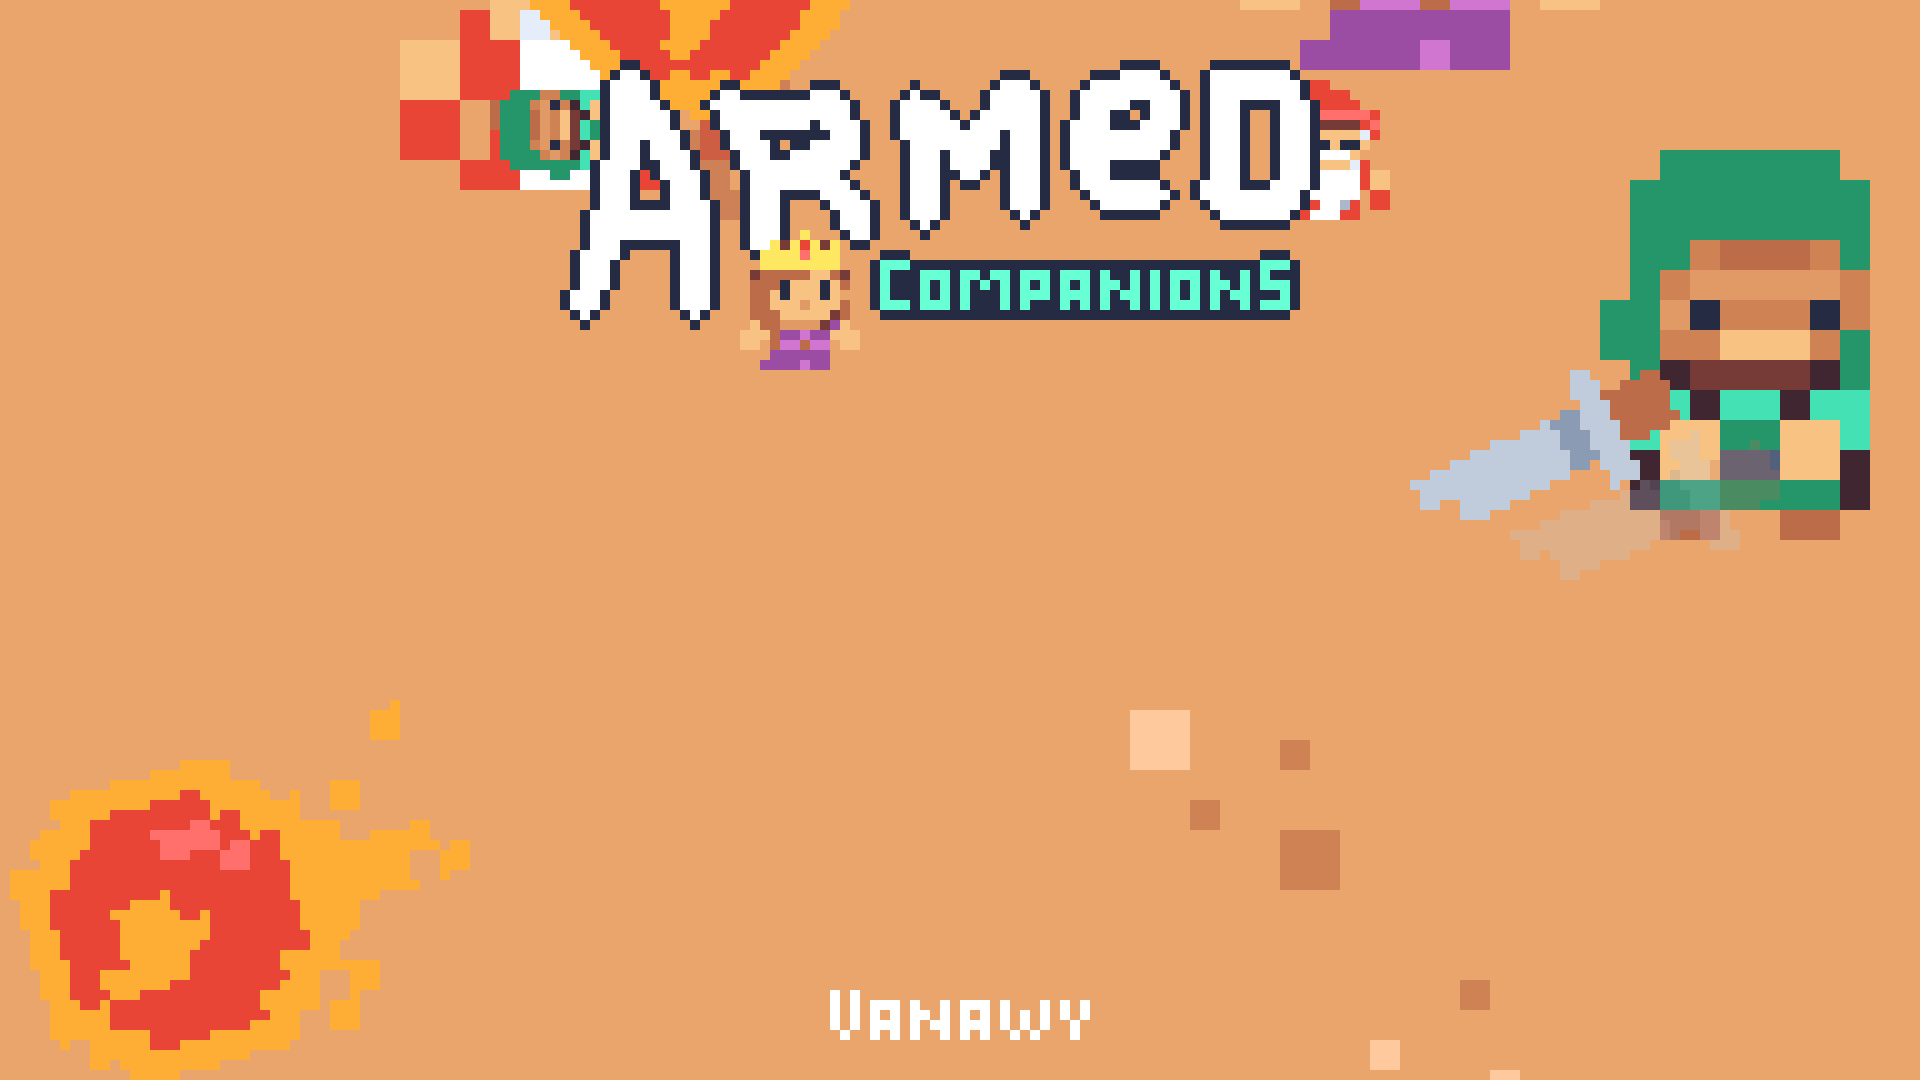 Armed Companions